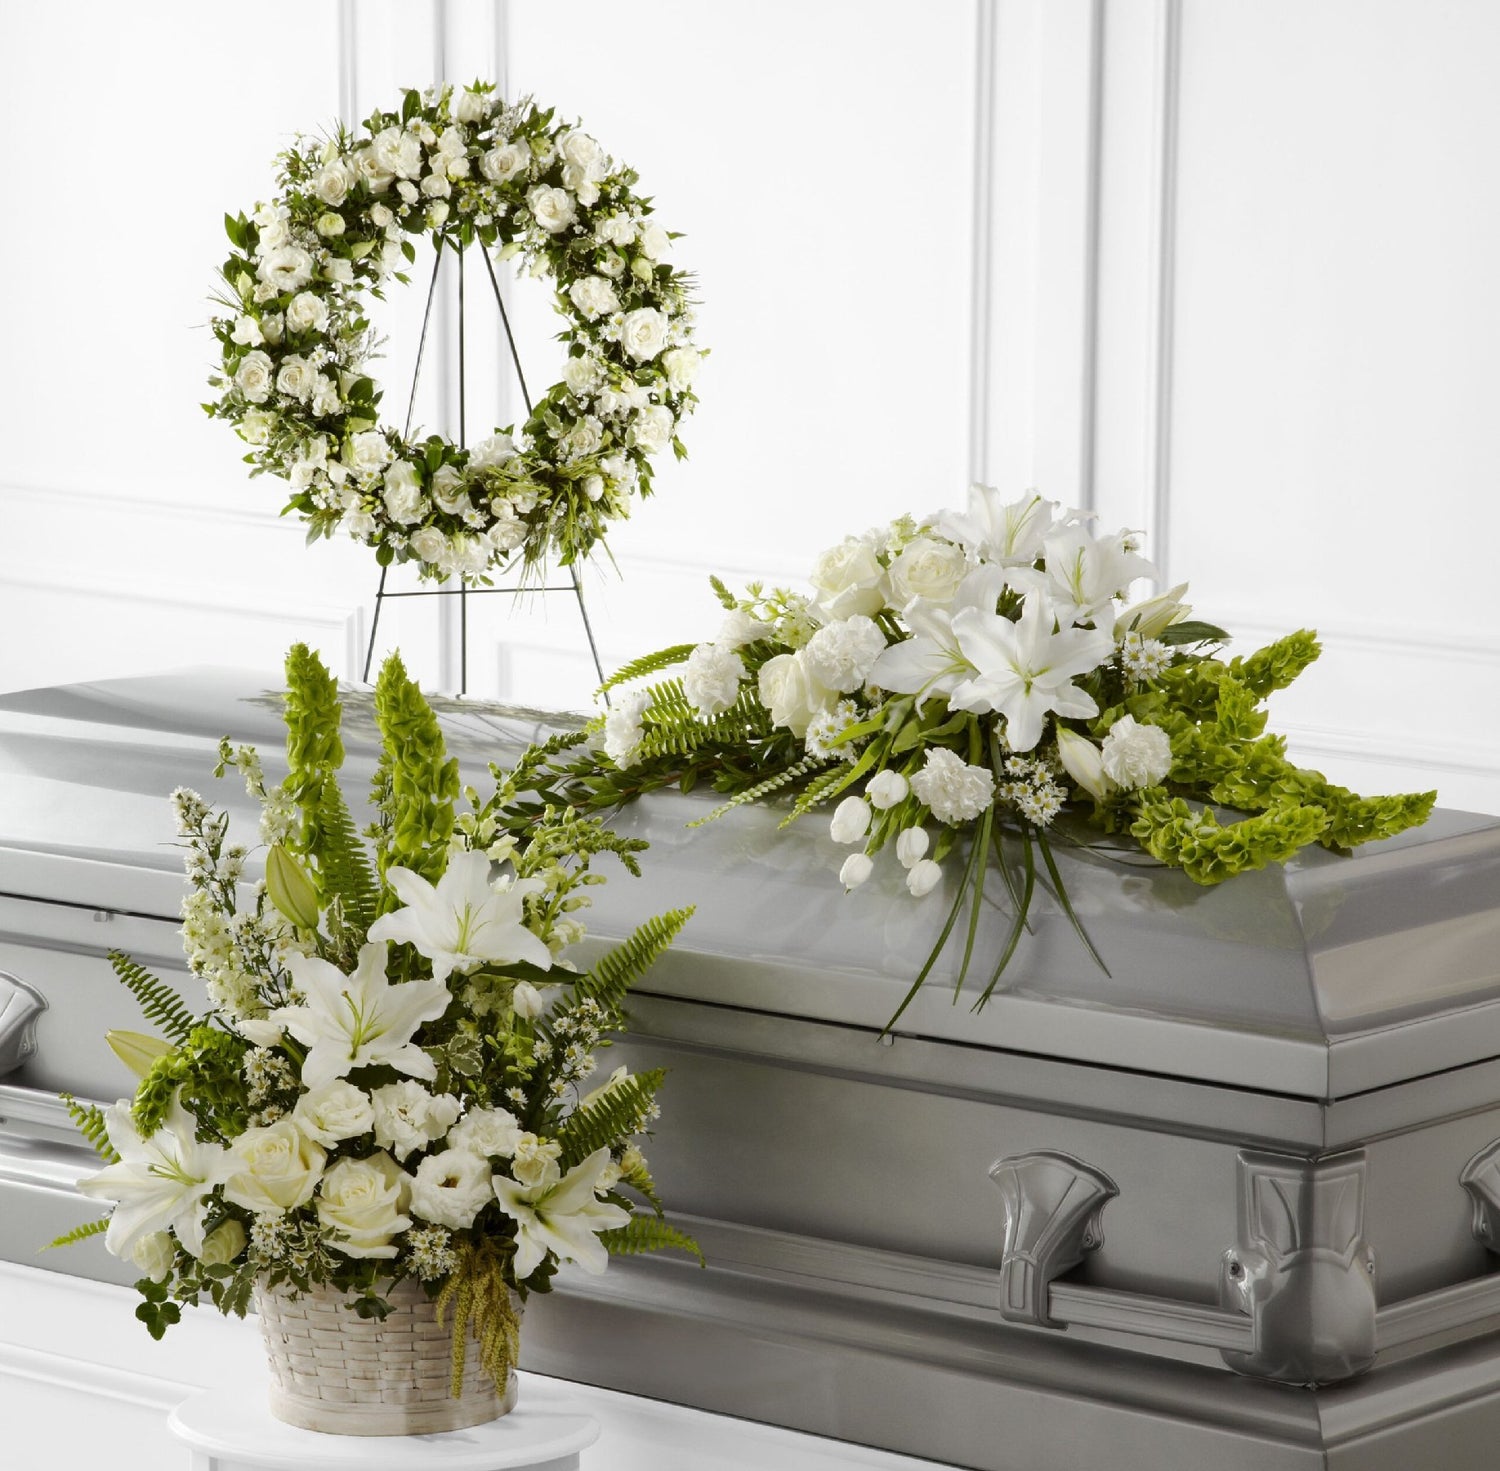 Funeral Vase Arrangements - Flower Delivery Brooklyn